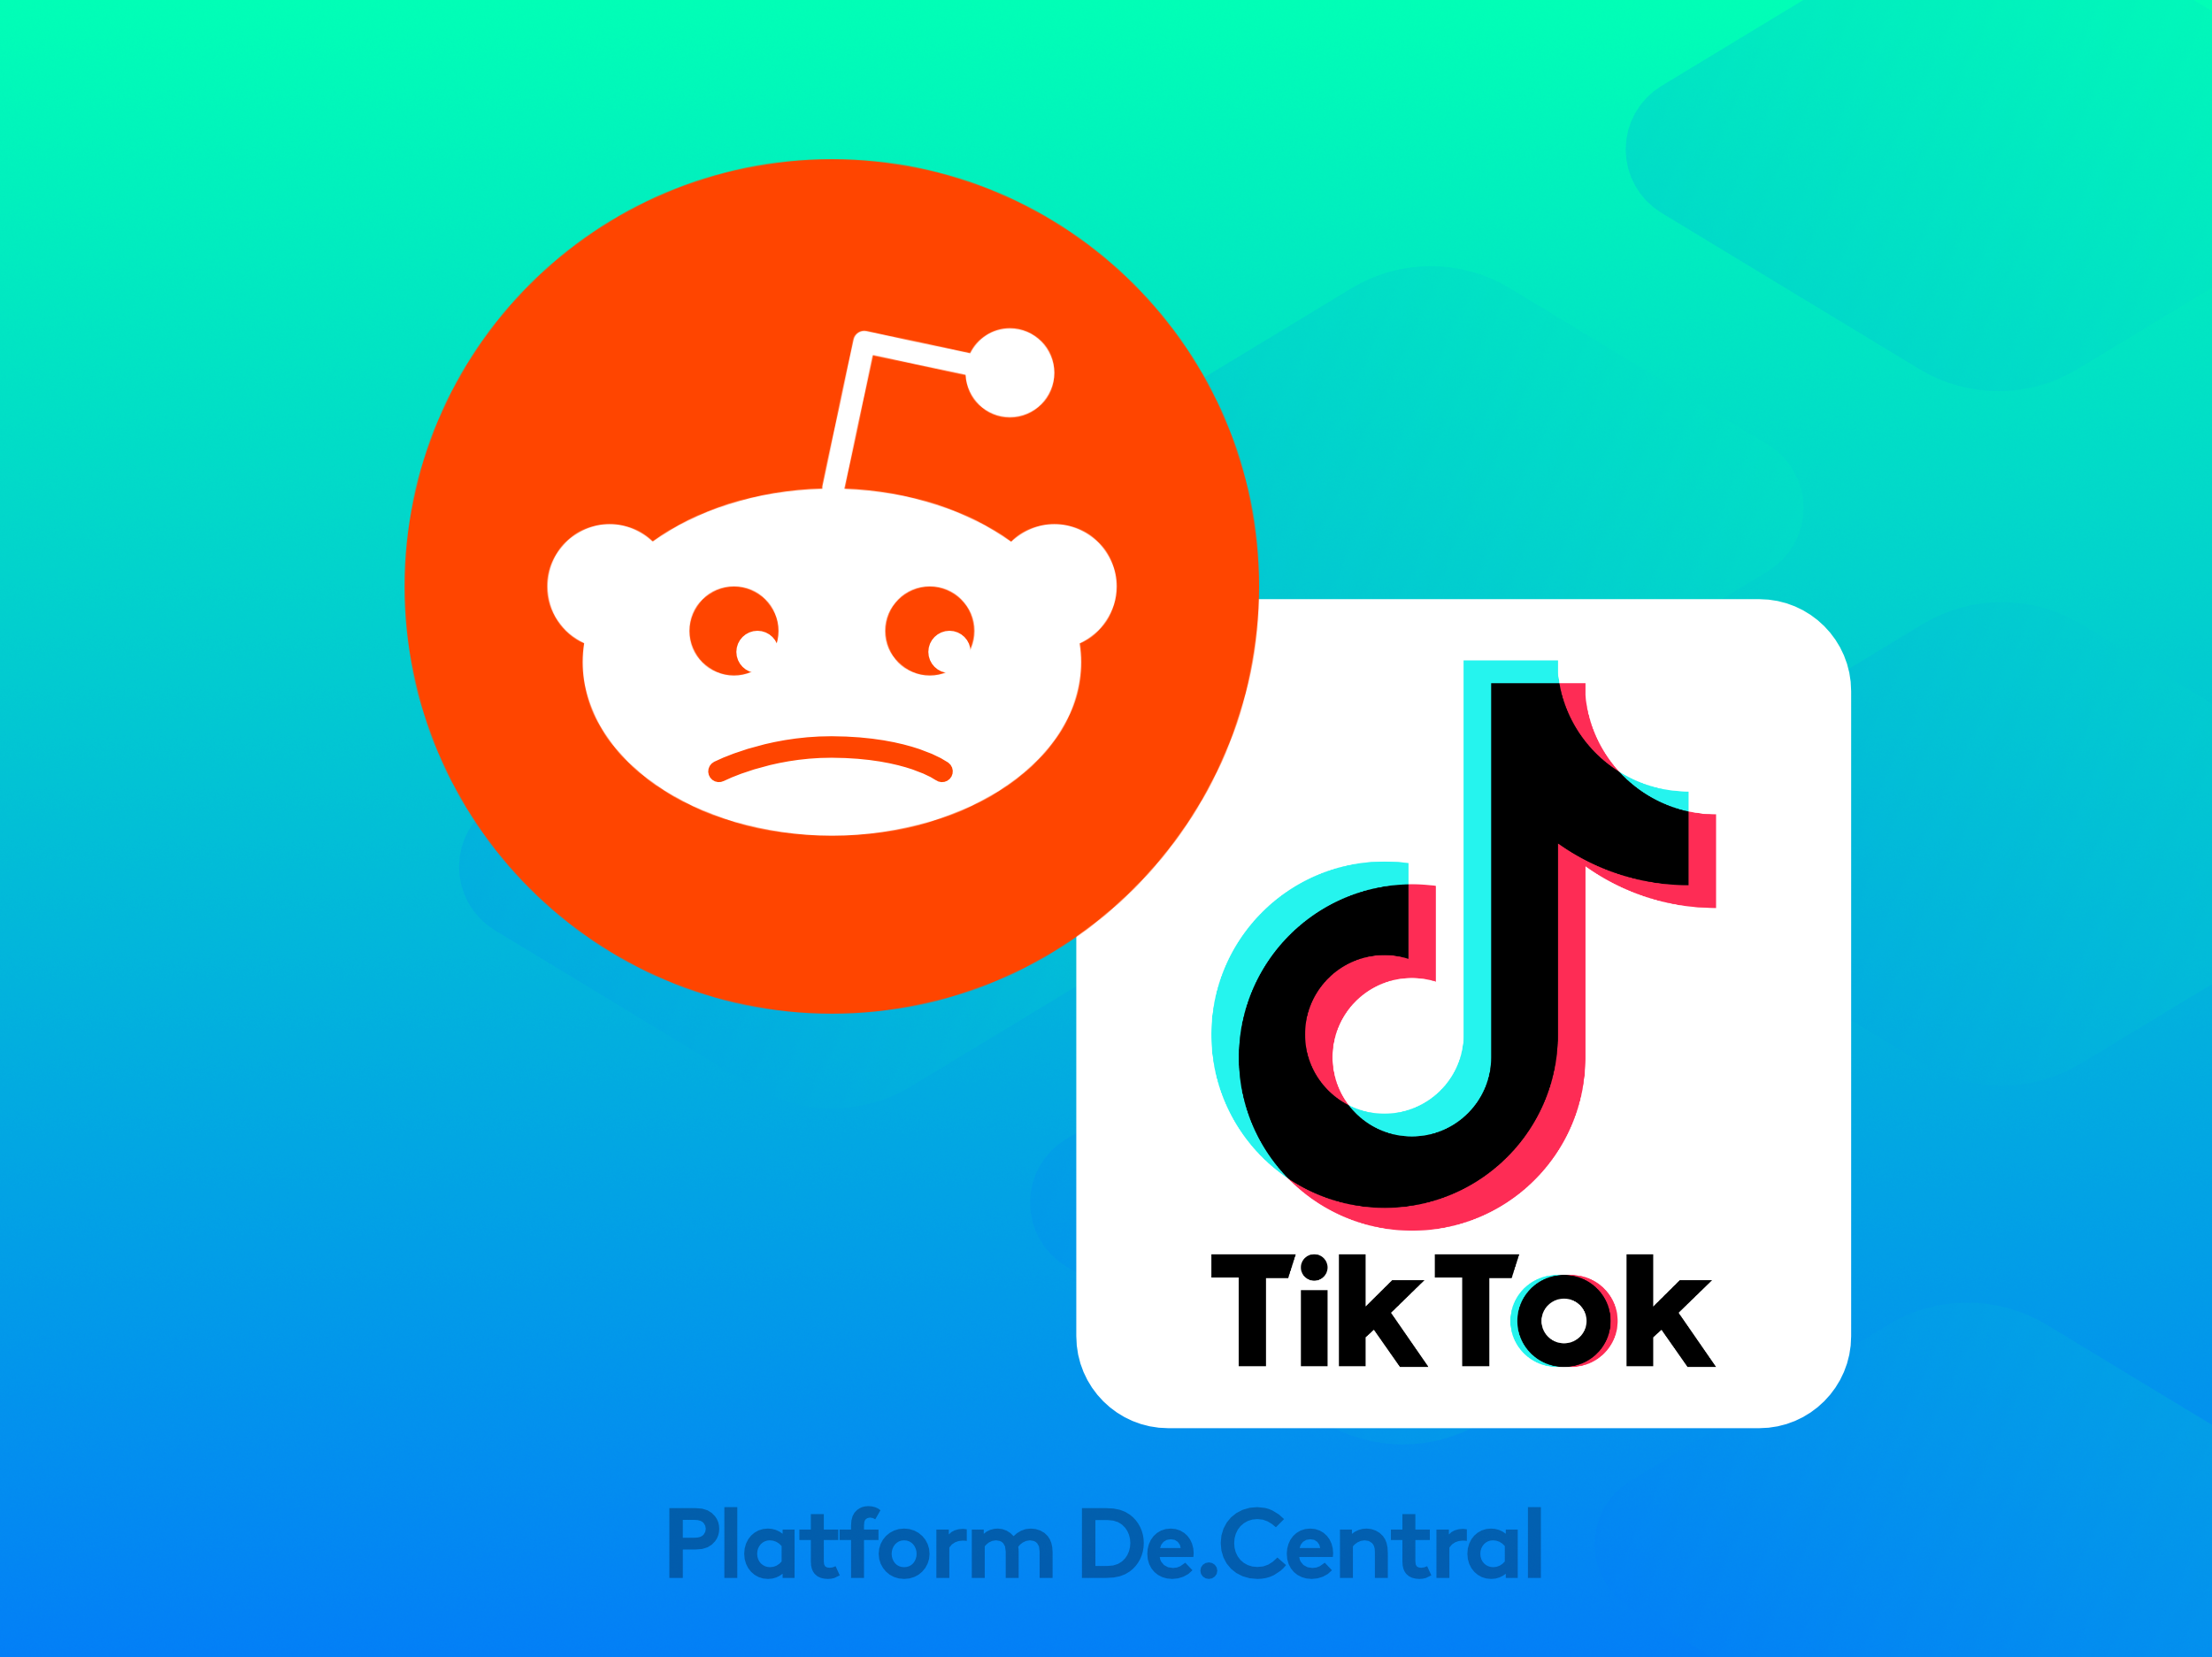 TikTok is “Fundamentally Parasitic” According to Reddit CEO